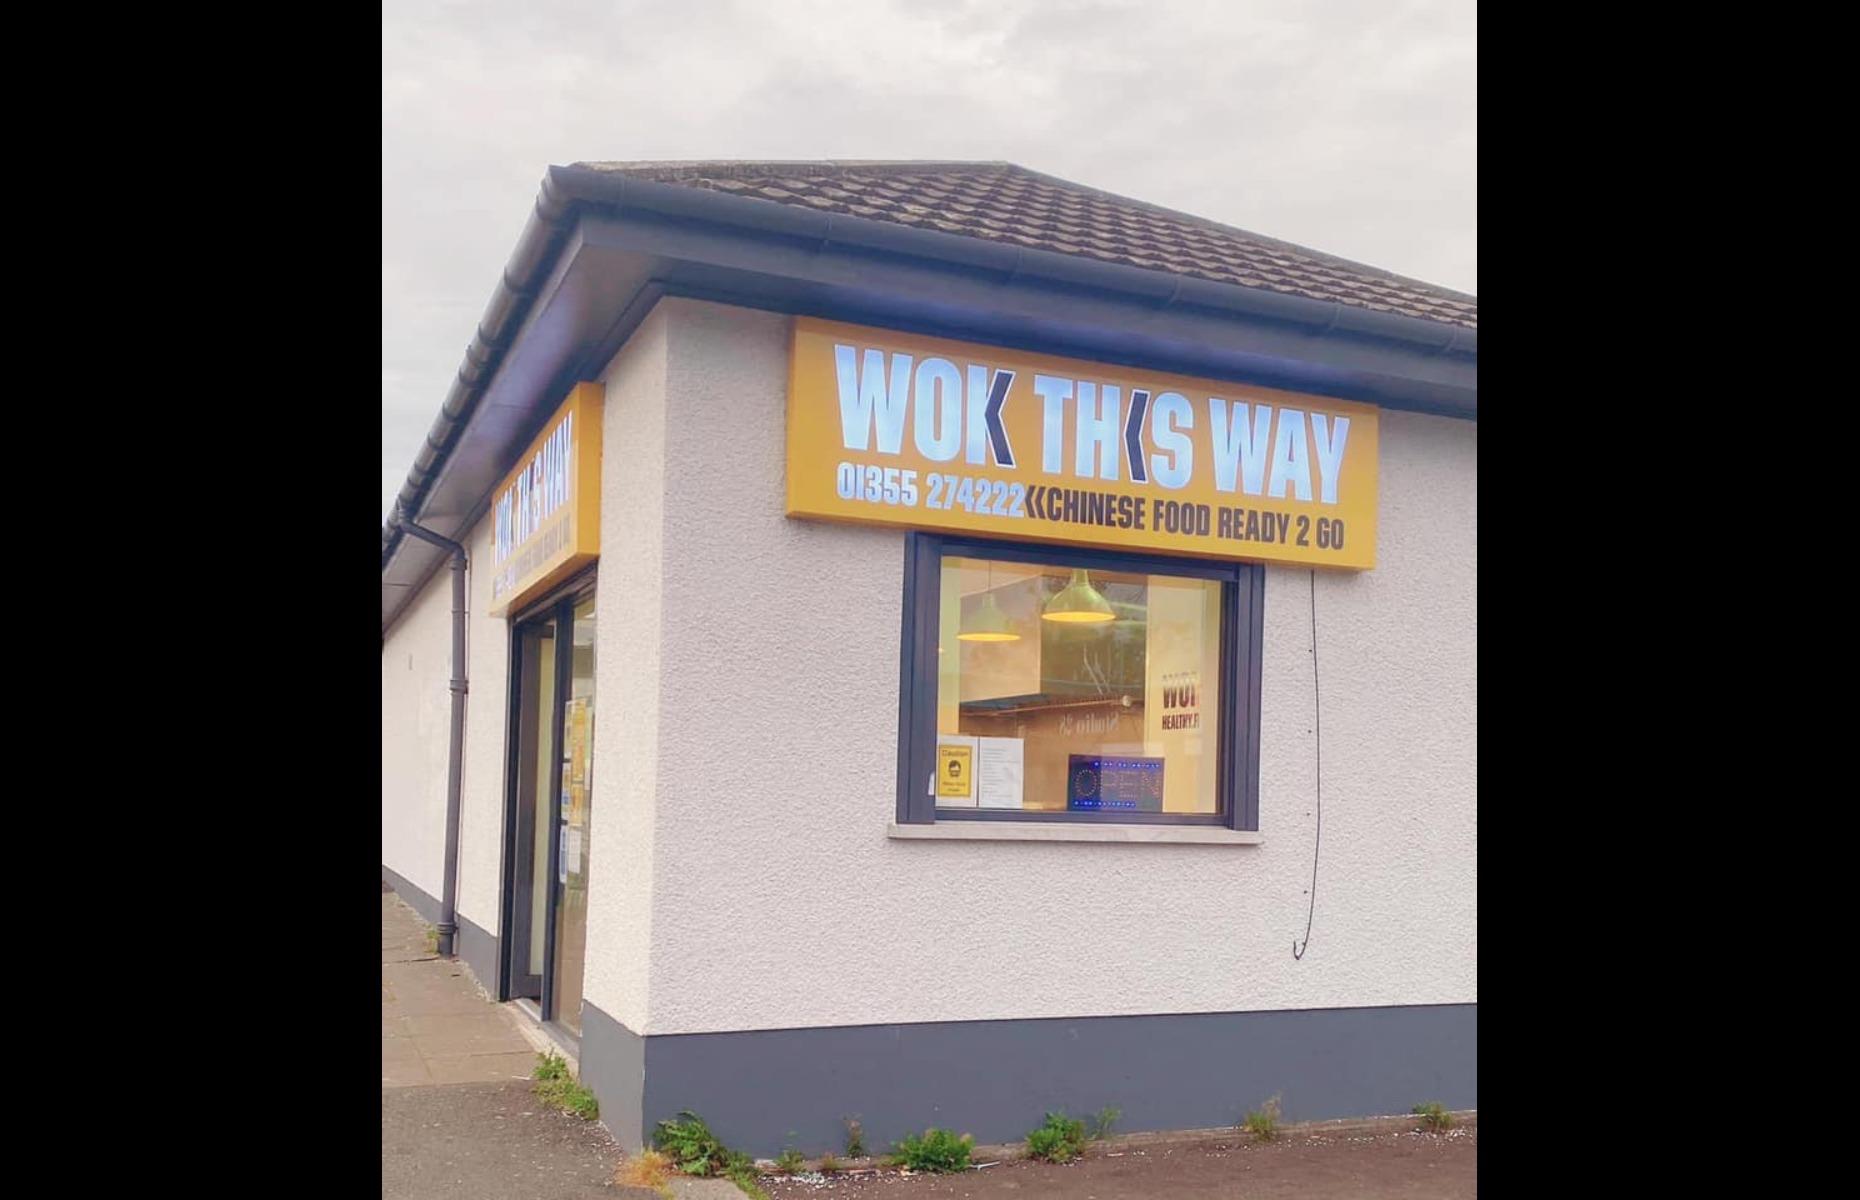 Wok This Way, Glasgow, UK